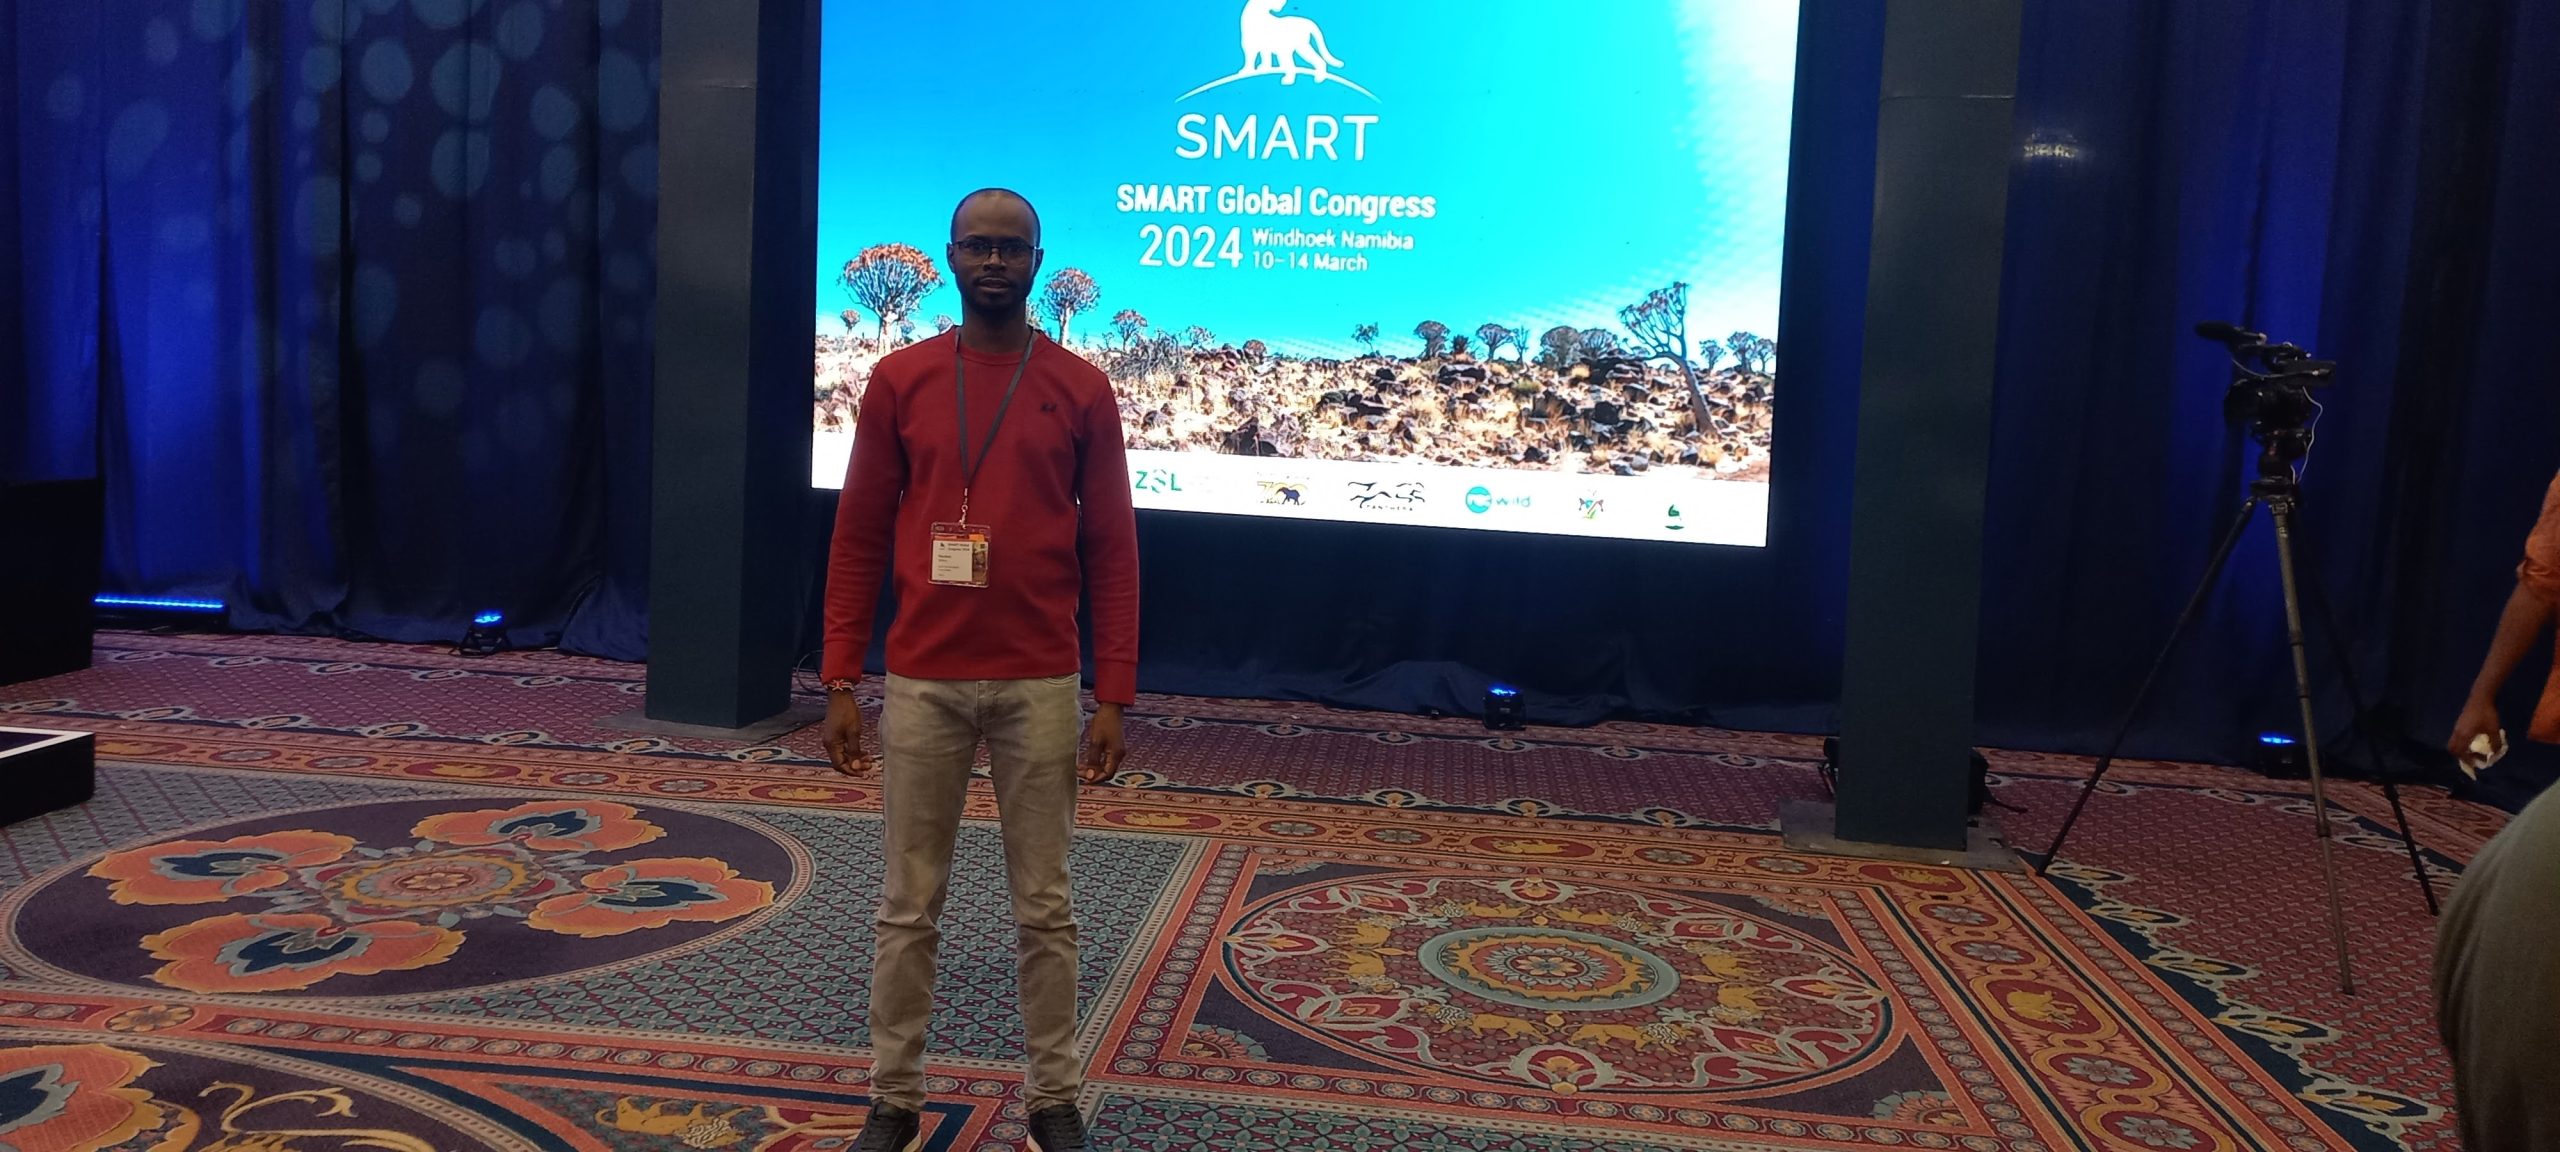 Newton Simiyu, attending the SMART Global Congress 2024